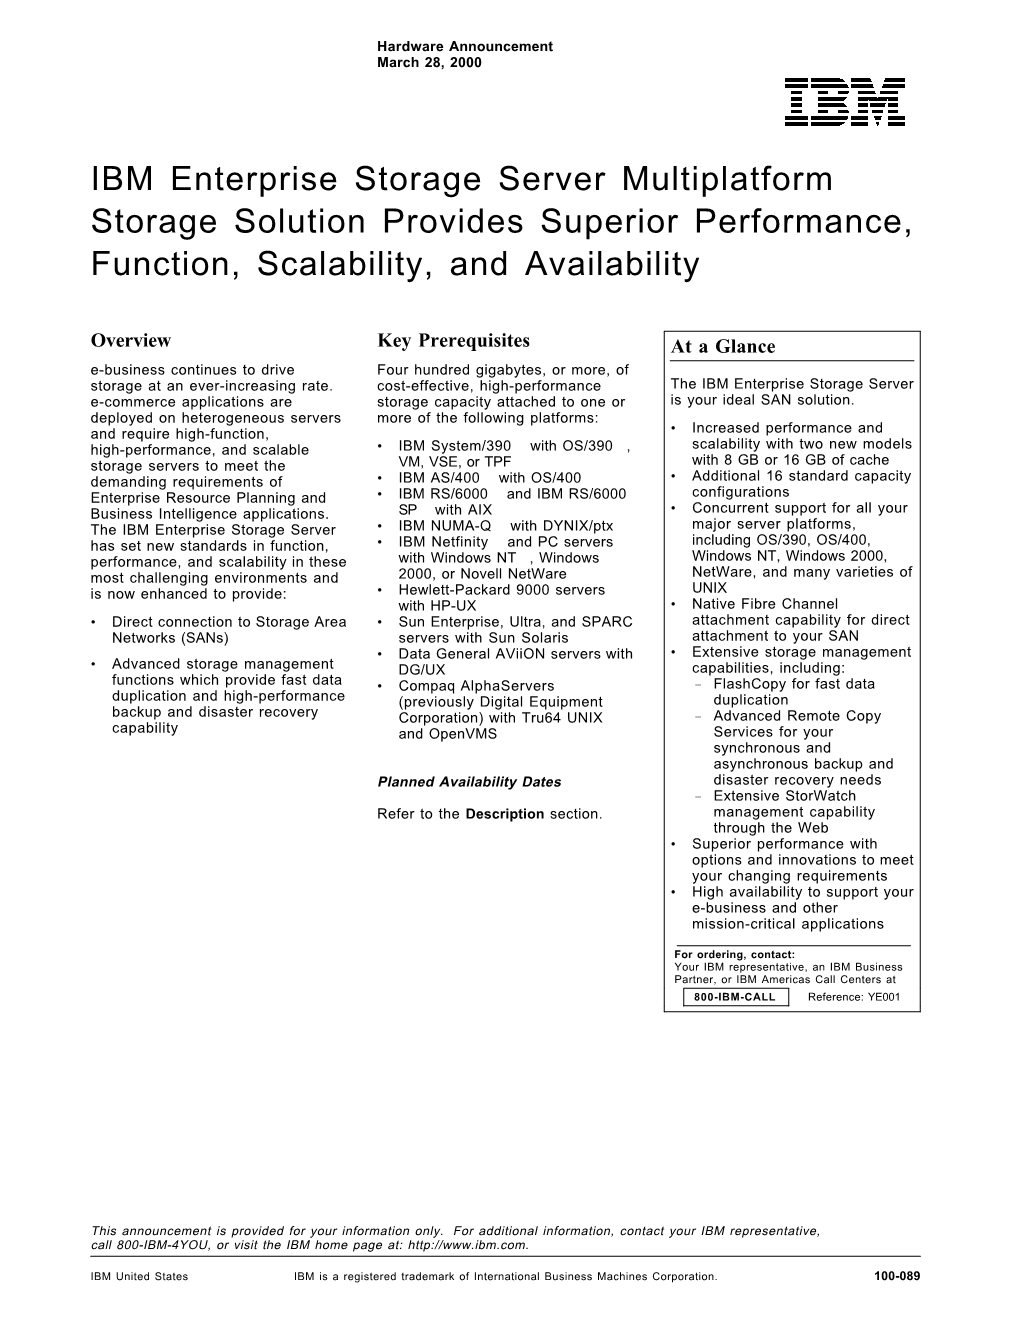 IBM Enterprise Storage Server Multiplatform Storage Solution Provides Superior Performance, Function, Scalability, and Availability